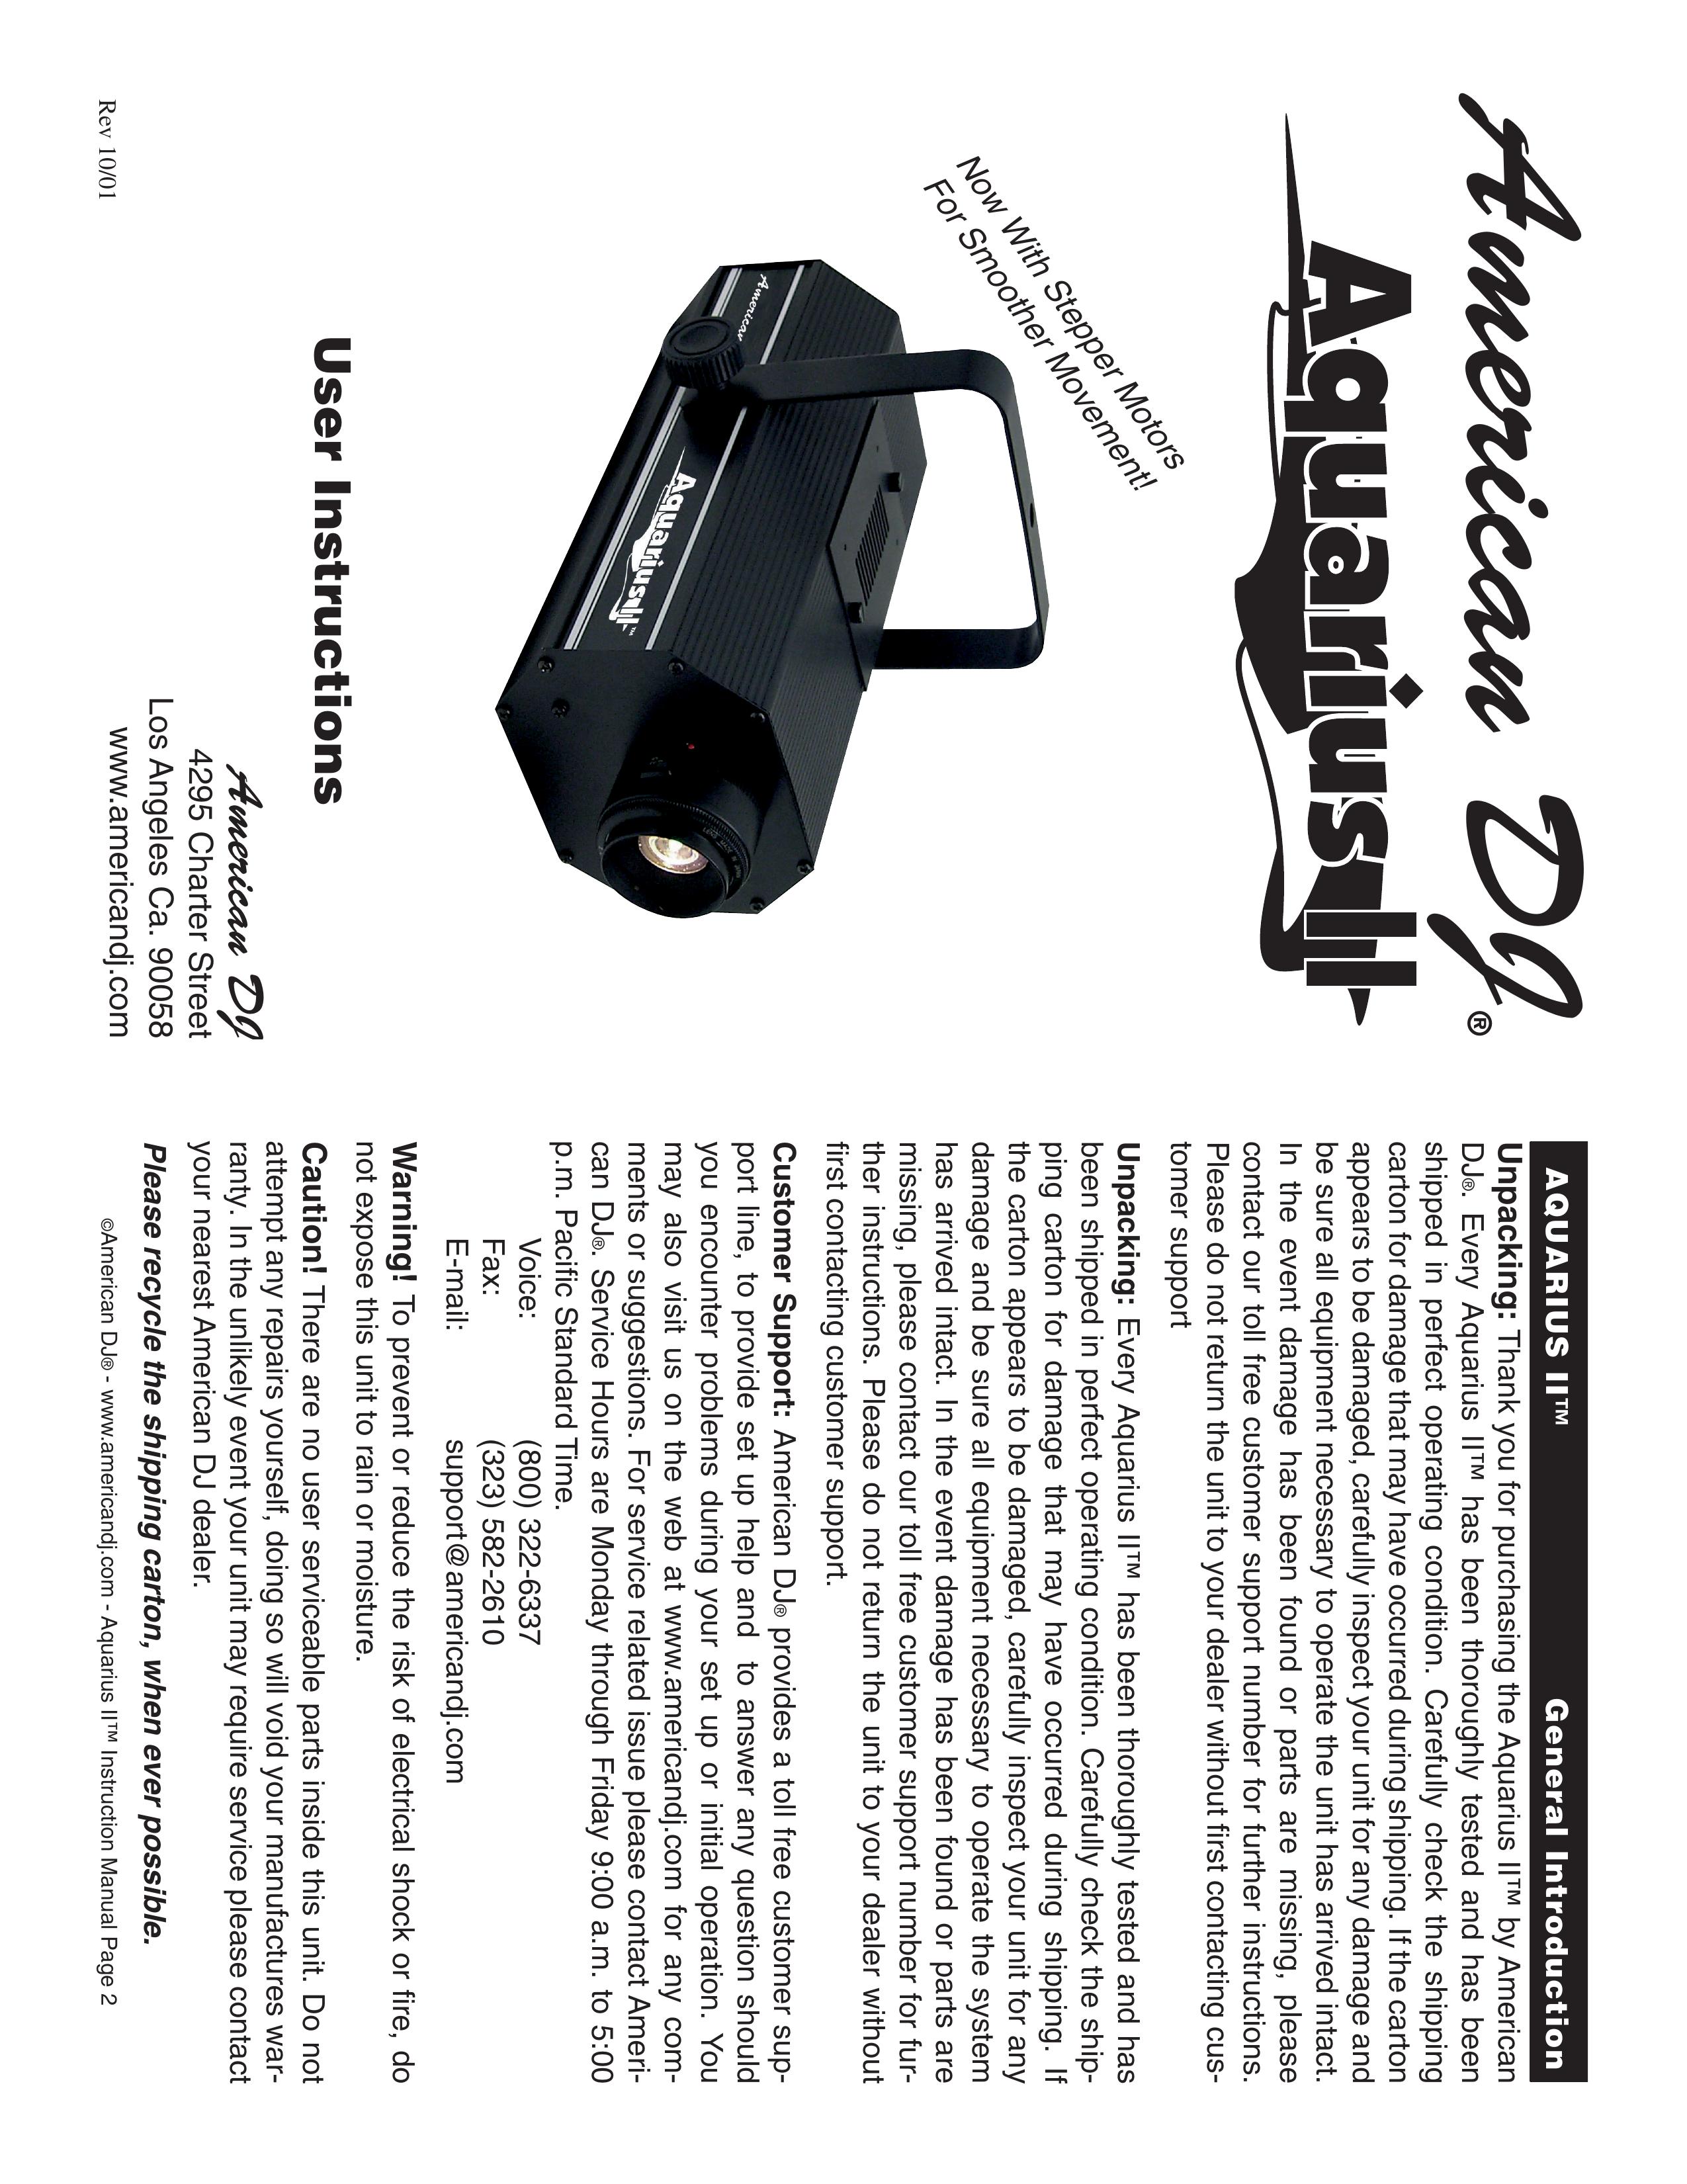 American DJ Aquarius II DJ Equipment User Manual (Page 1)